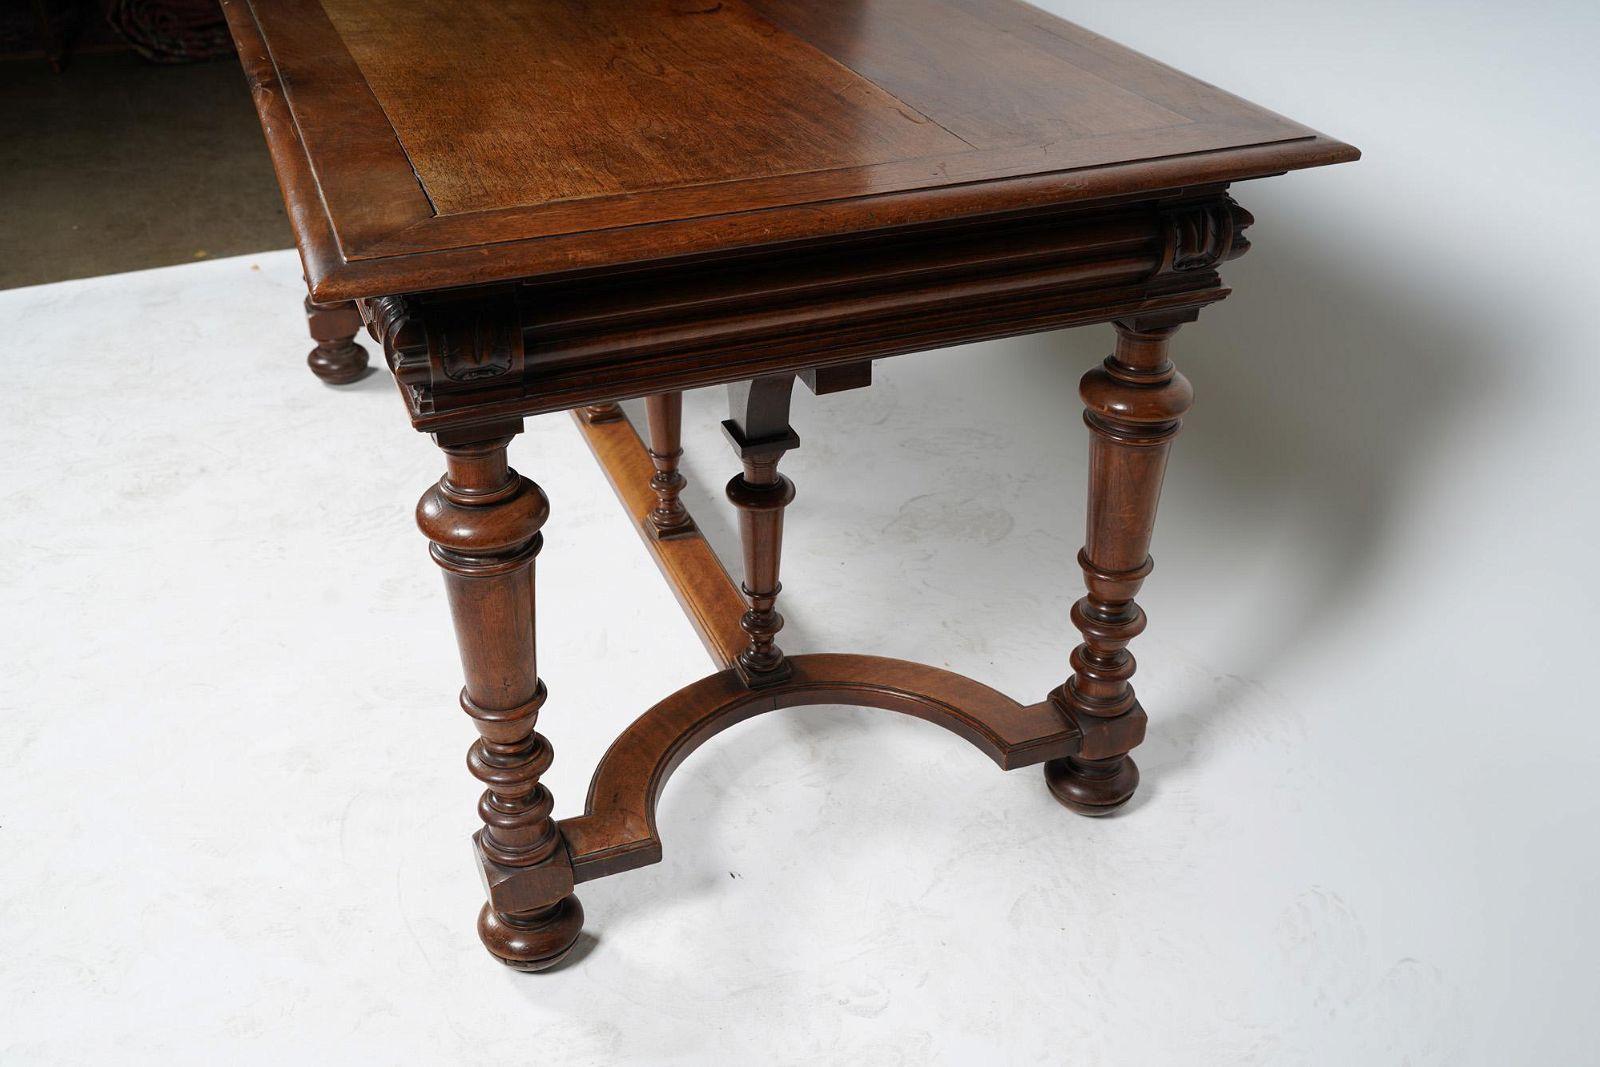 Antique American Renaissance Revival Walnut Library Table Desk Mid 19th Century For Sale 5